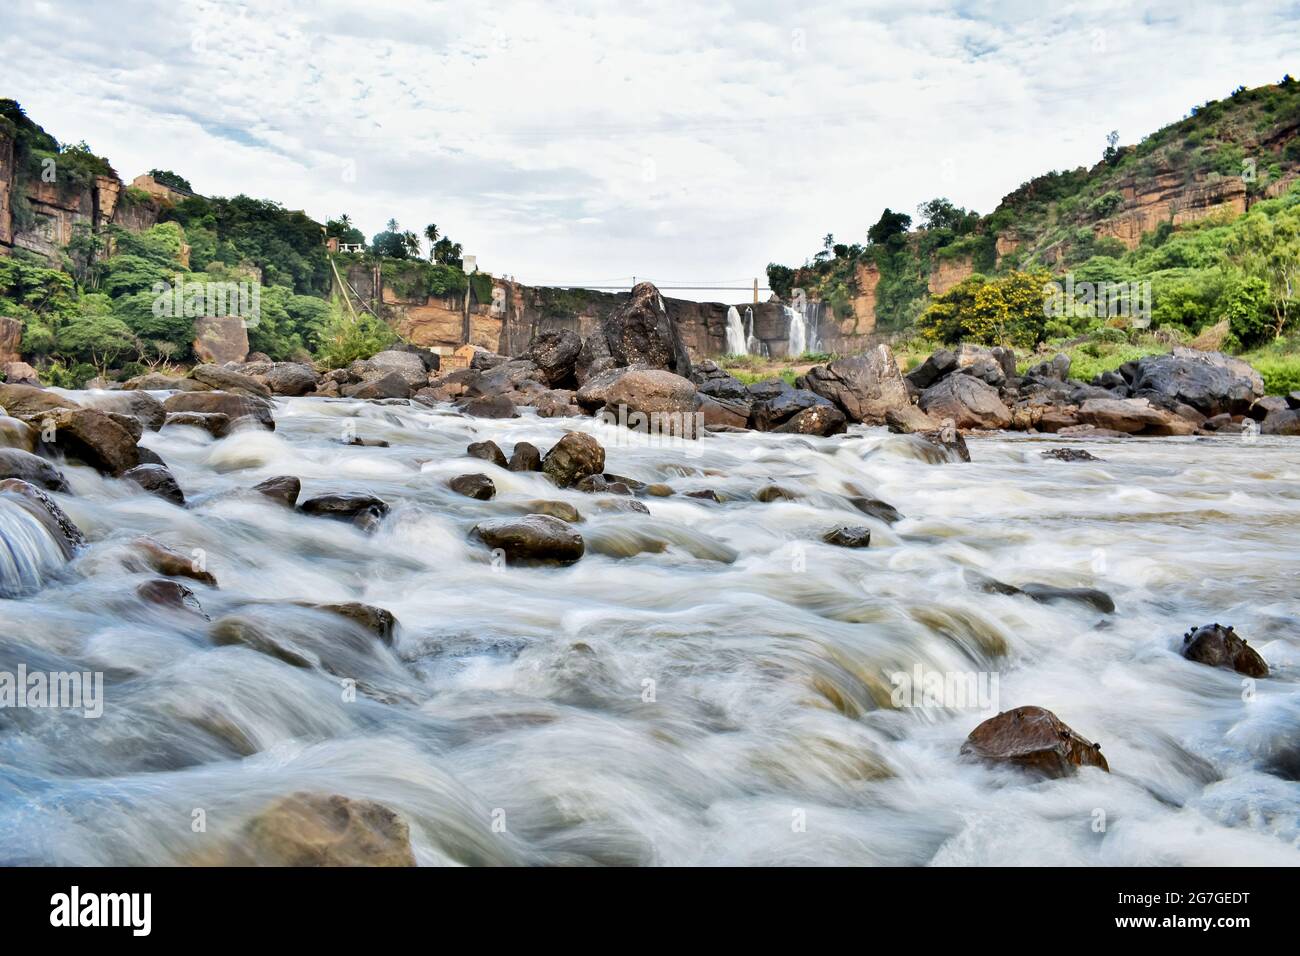 Wide view of Gokak Falls, long exlosure, Gokak, Karnataka, India Stock Photo